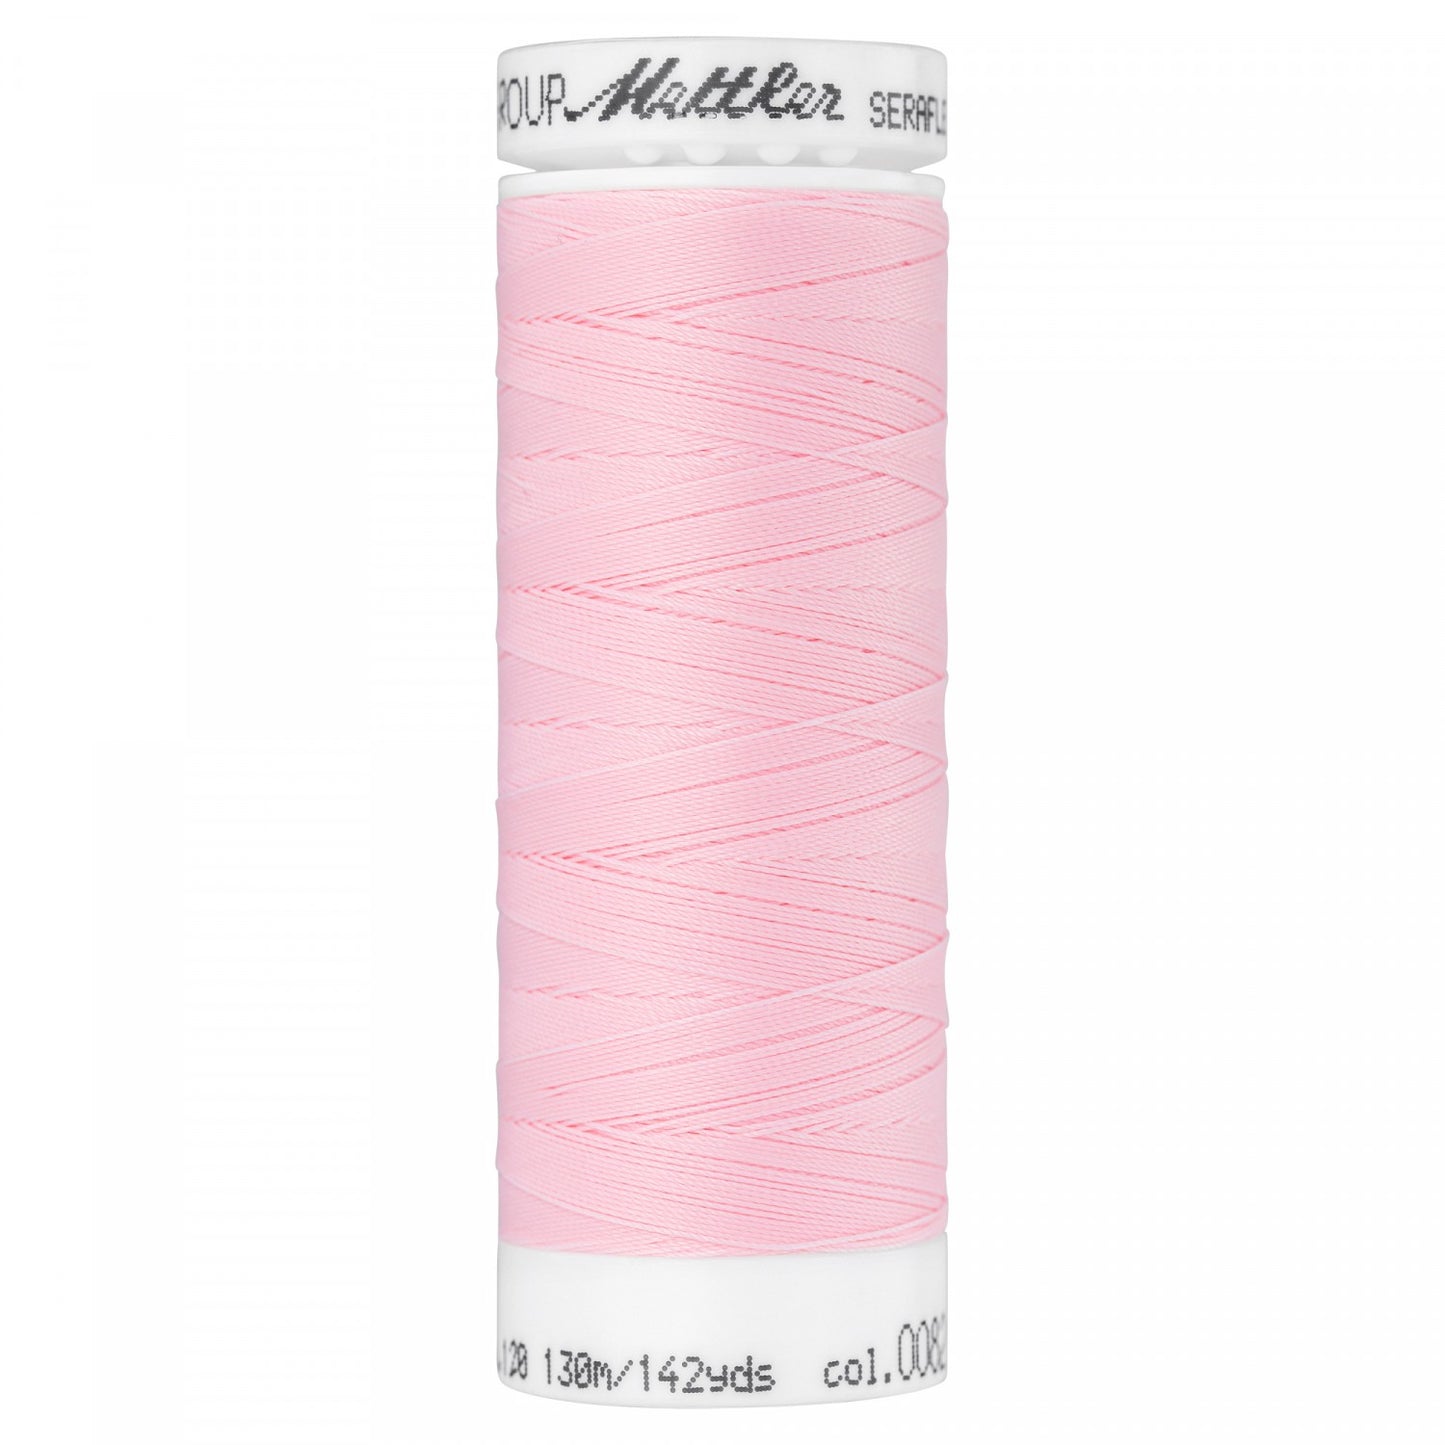 Seraflex - Mettler - Stretch Thread - For Stretchy Seams - 130 Meters - Shell Pink